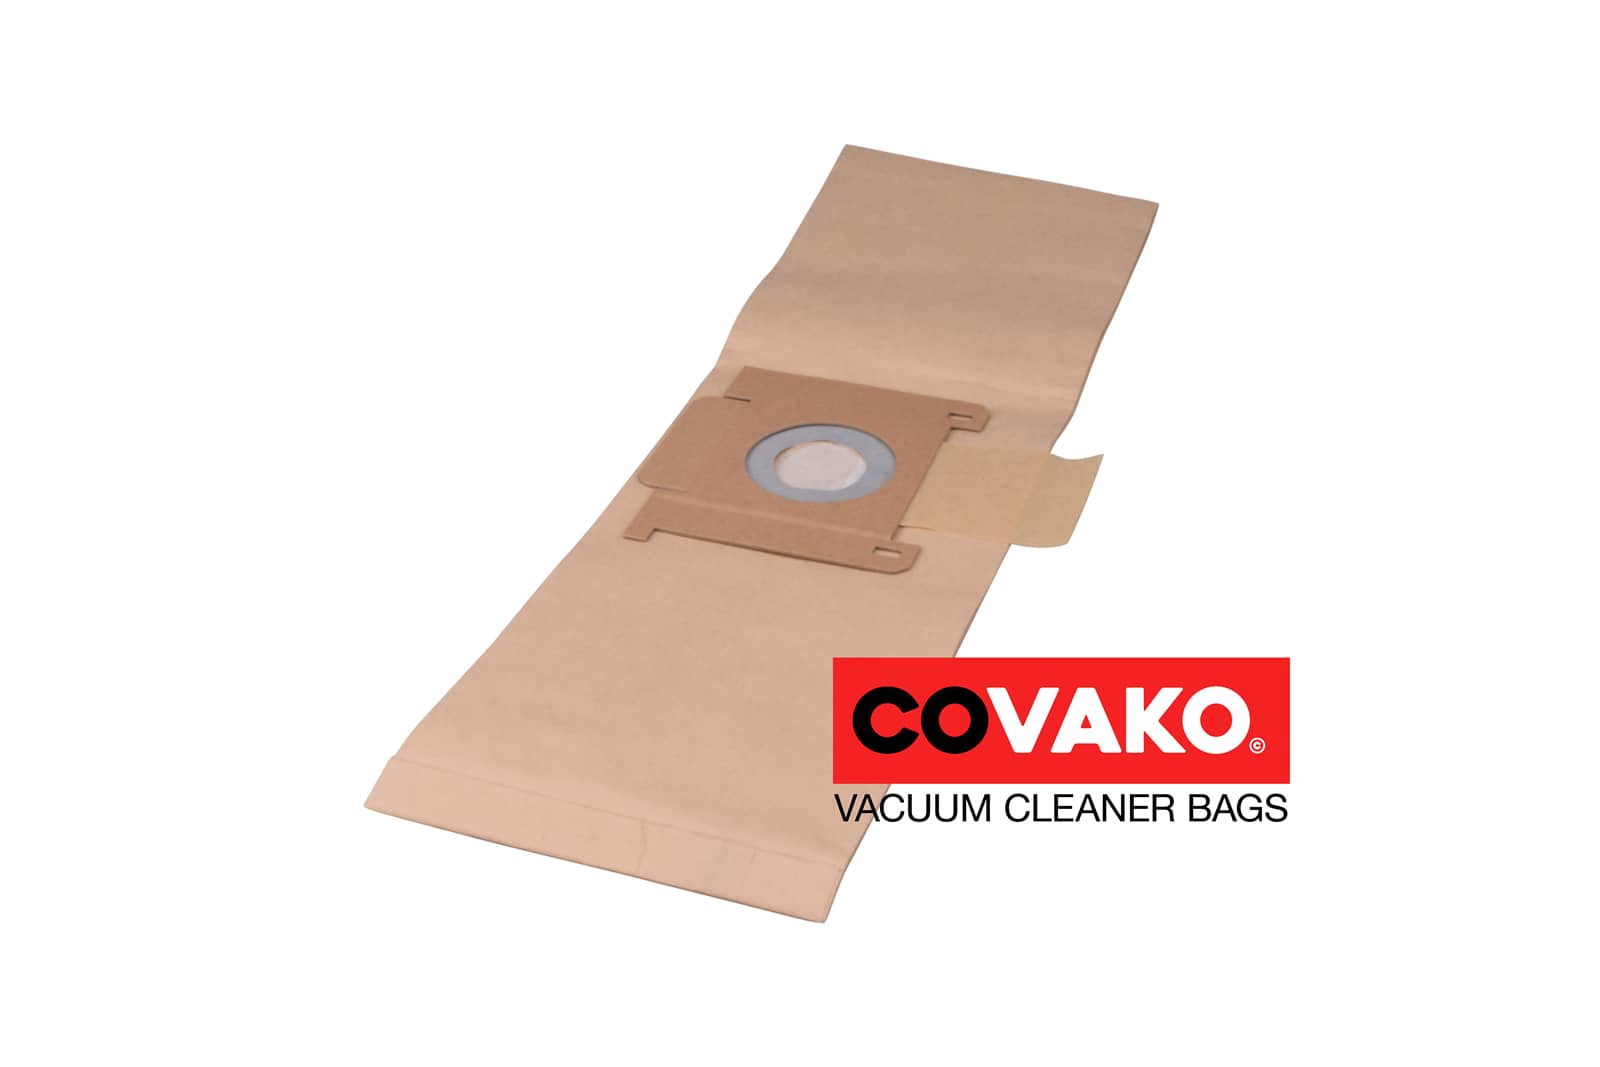 Clean a la Card Hi-Filtration 6.0 Save / Paper - Clean a la Card vacuum cleaner bags